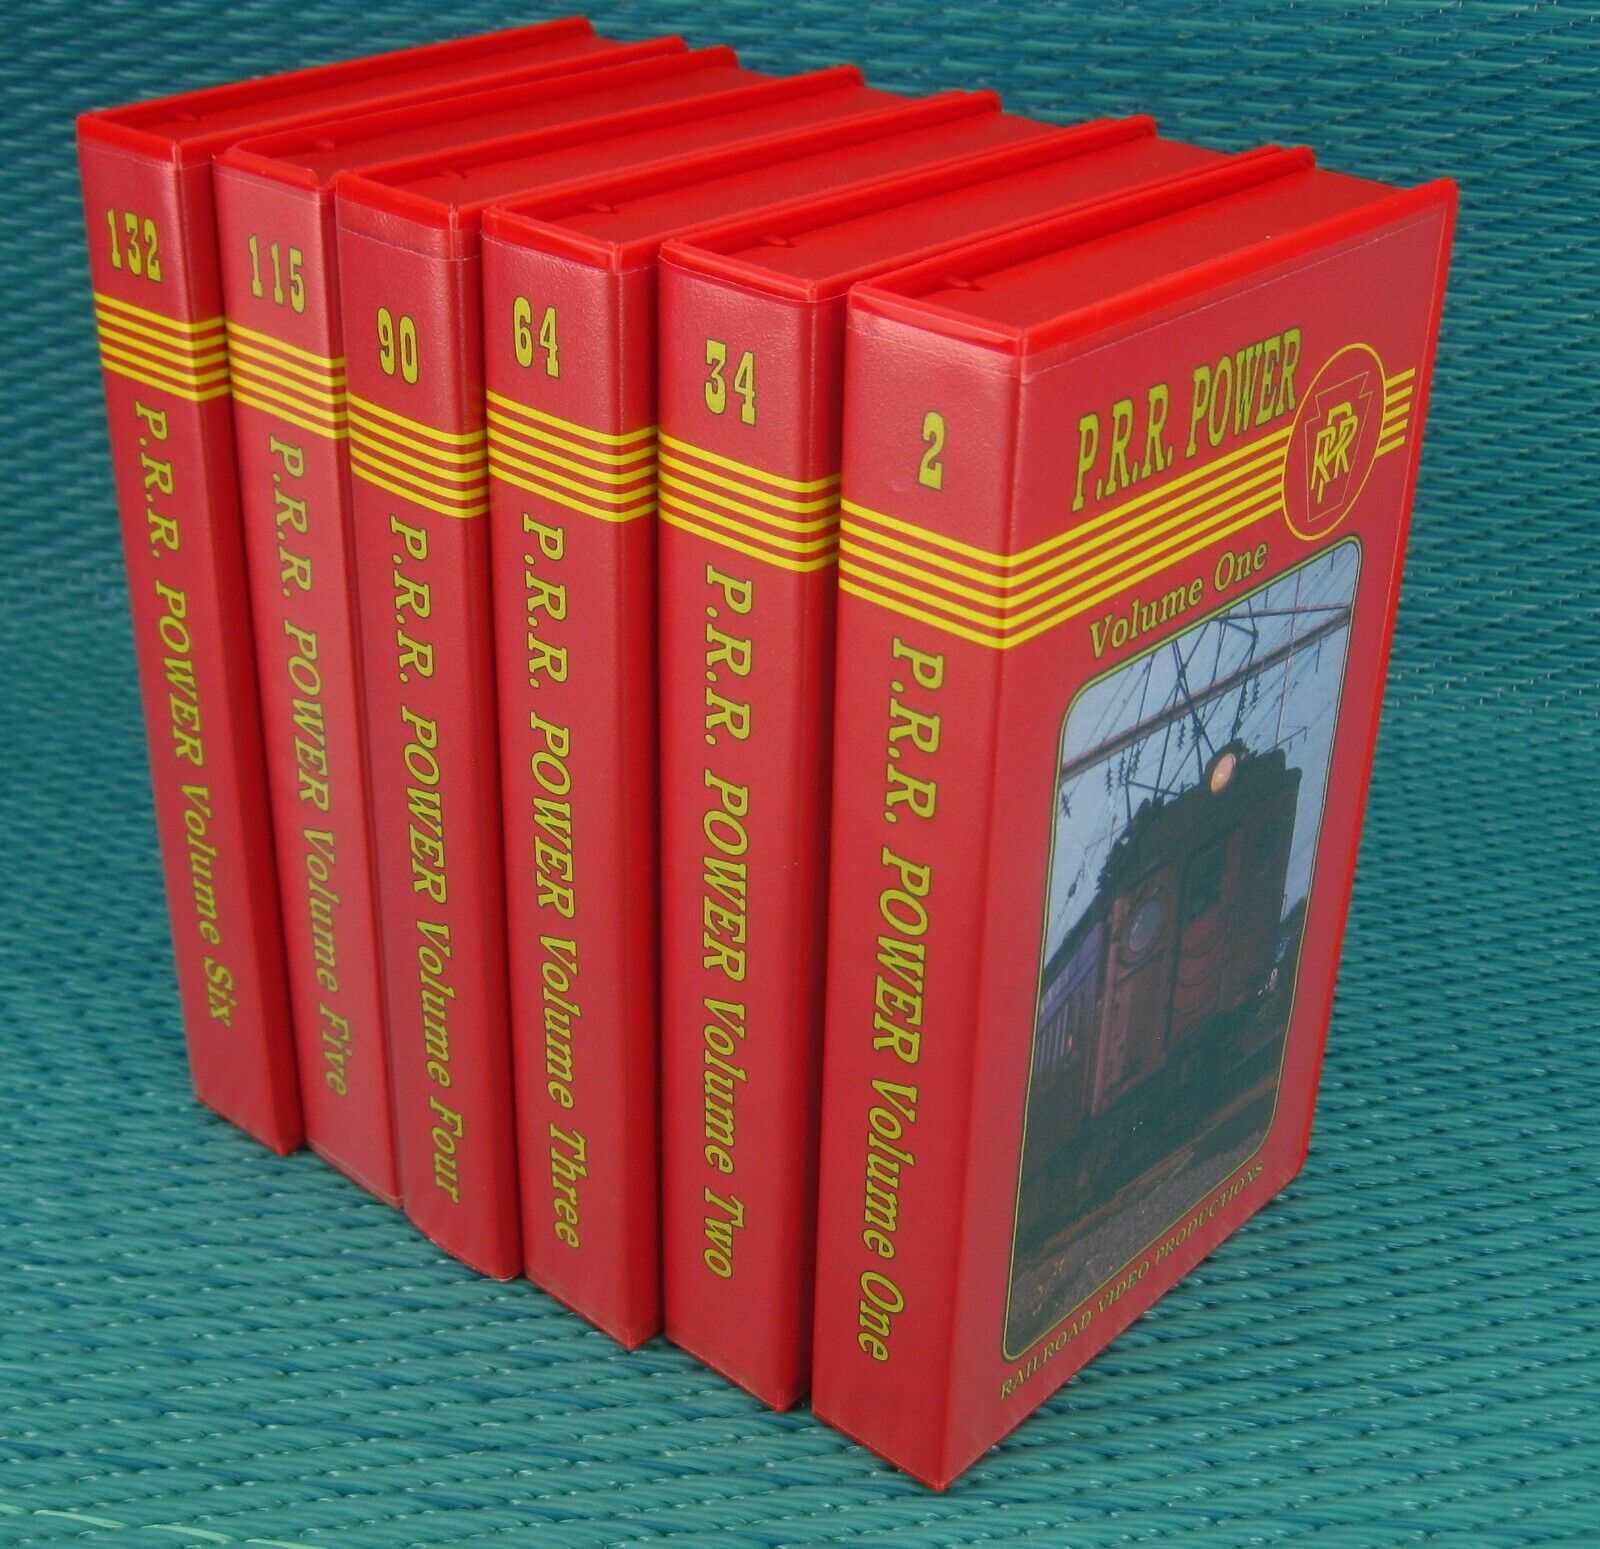 P.R.R. Power VHS Set Volume 1-6 Pennsylvania Railroad Video Productions W. Berko